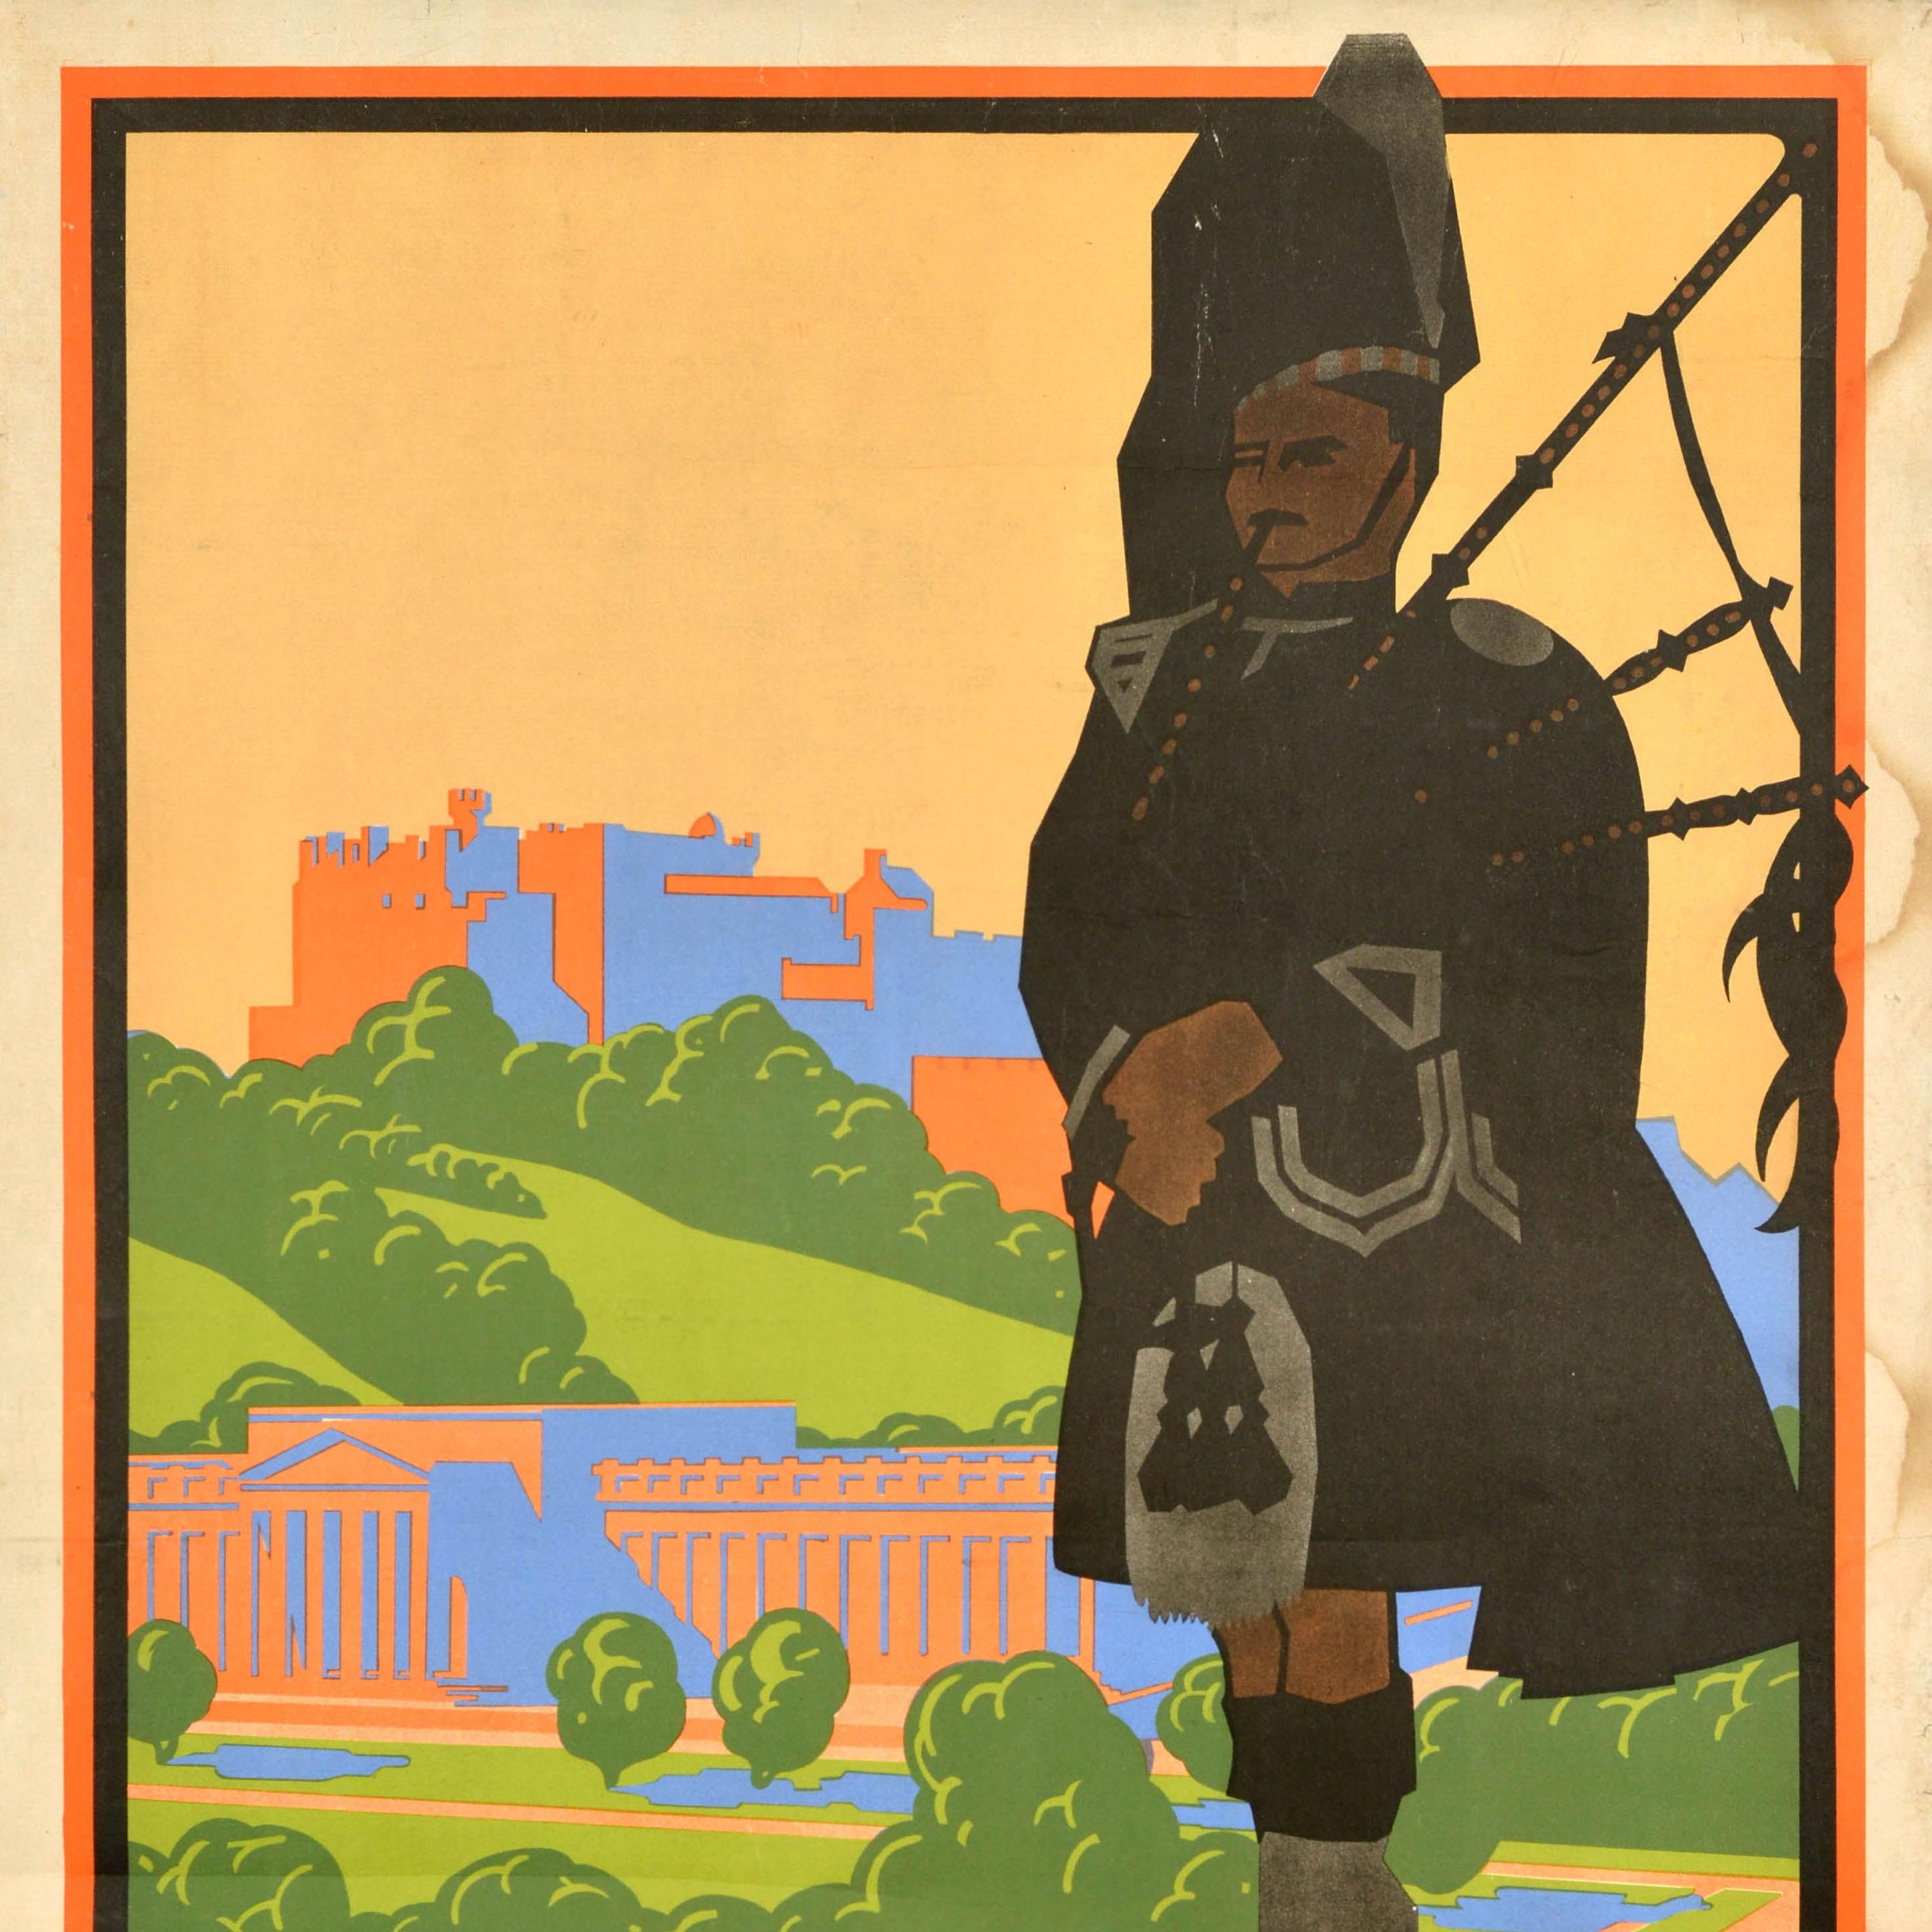 British Original Vintage Travel Poster Edinburgh LMS London Midland And Scottish Railway For Sale